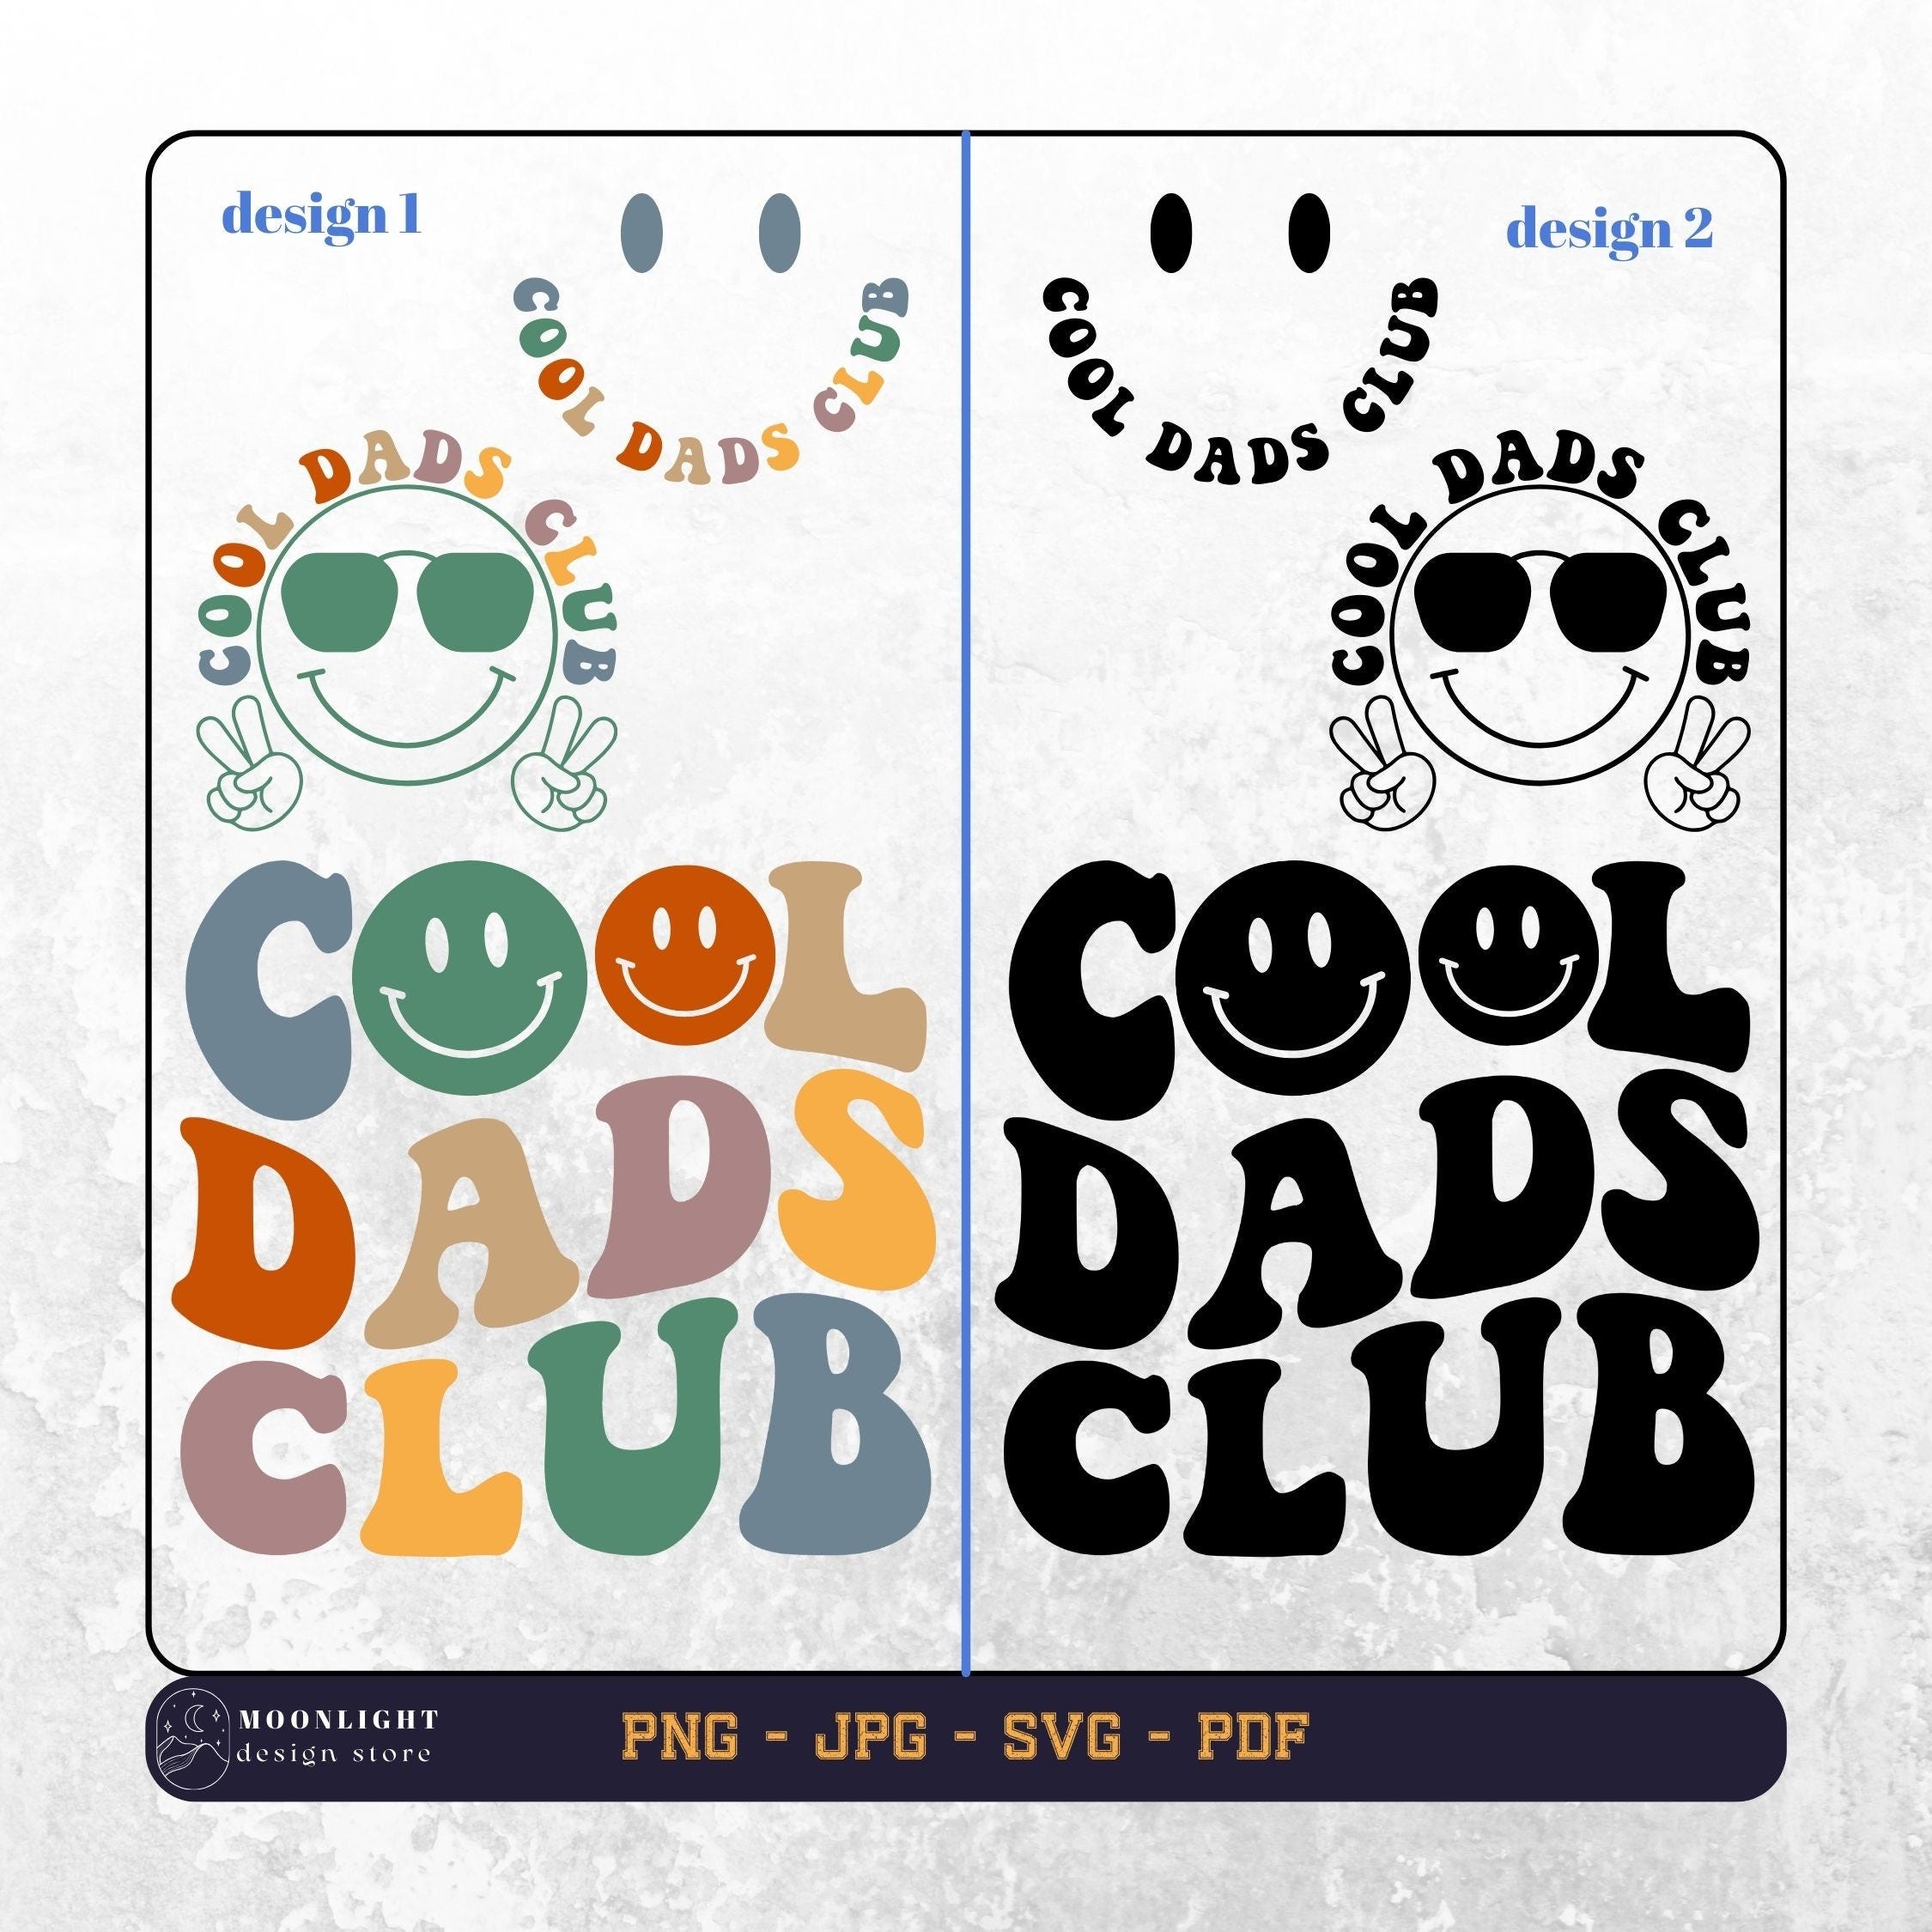 Cool Dads Club svg, Cool Dads Club png, Cool Dads Club Shirt Svg, Cool Dads Club Shirt Png, Funny Dads Svg, Dads Svg, Dad Wavy Text